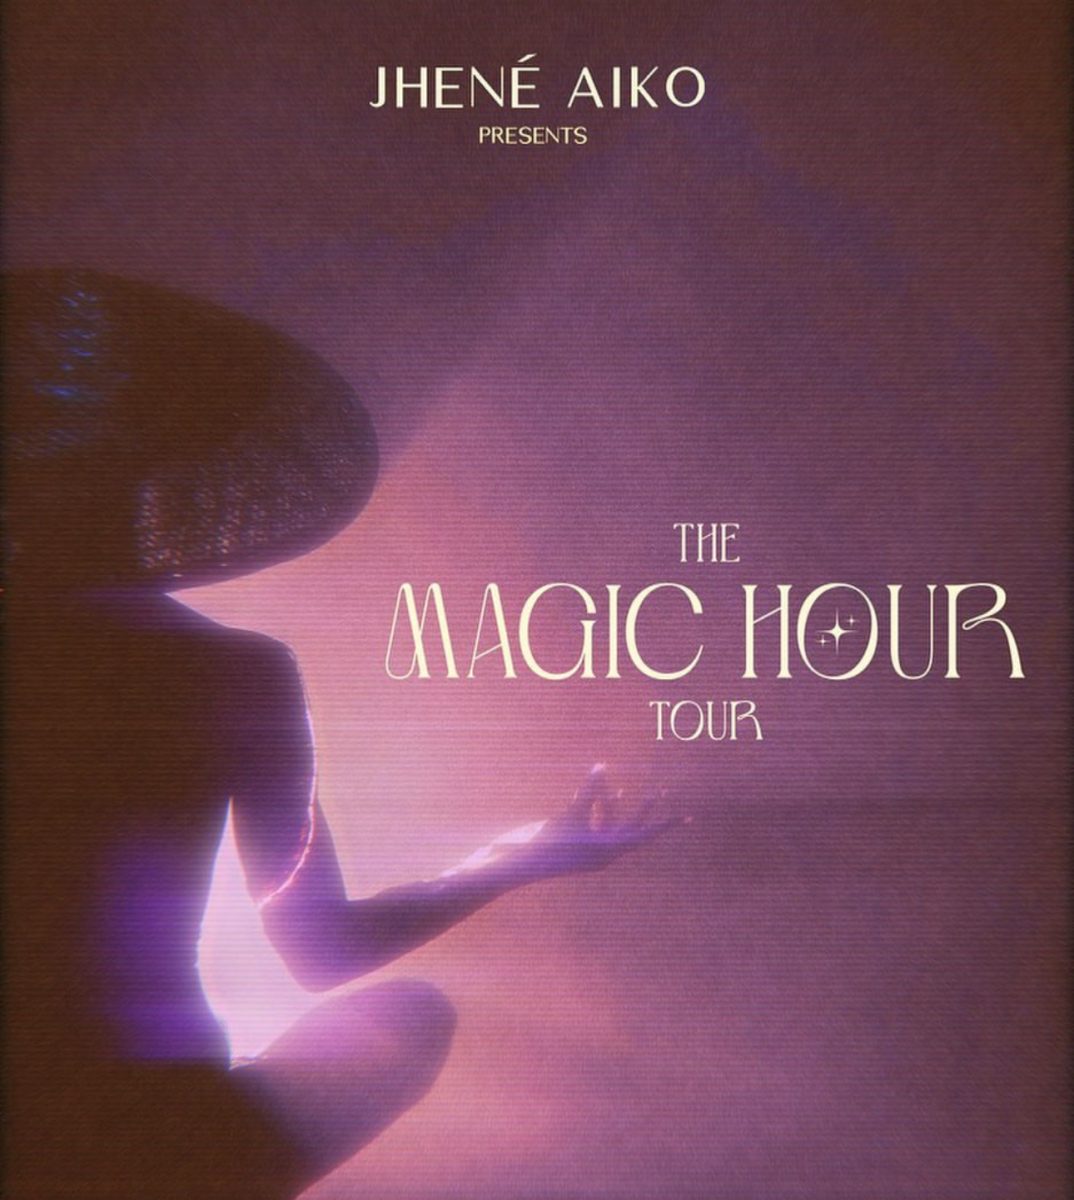 The Magic Tour